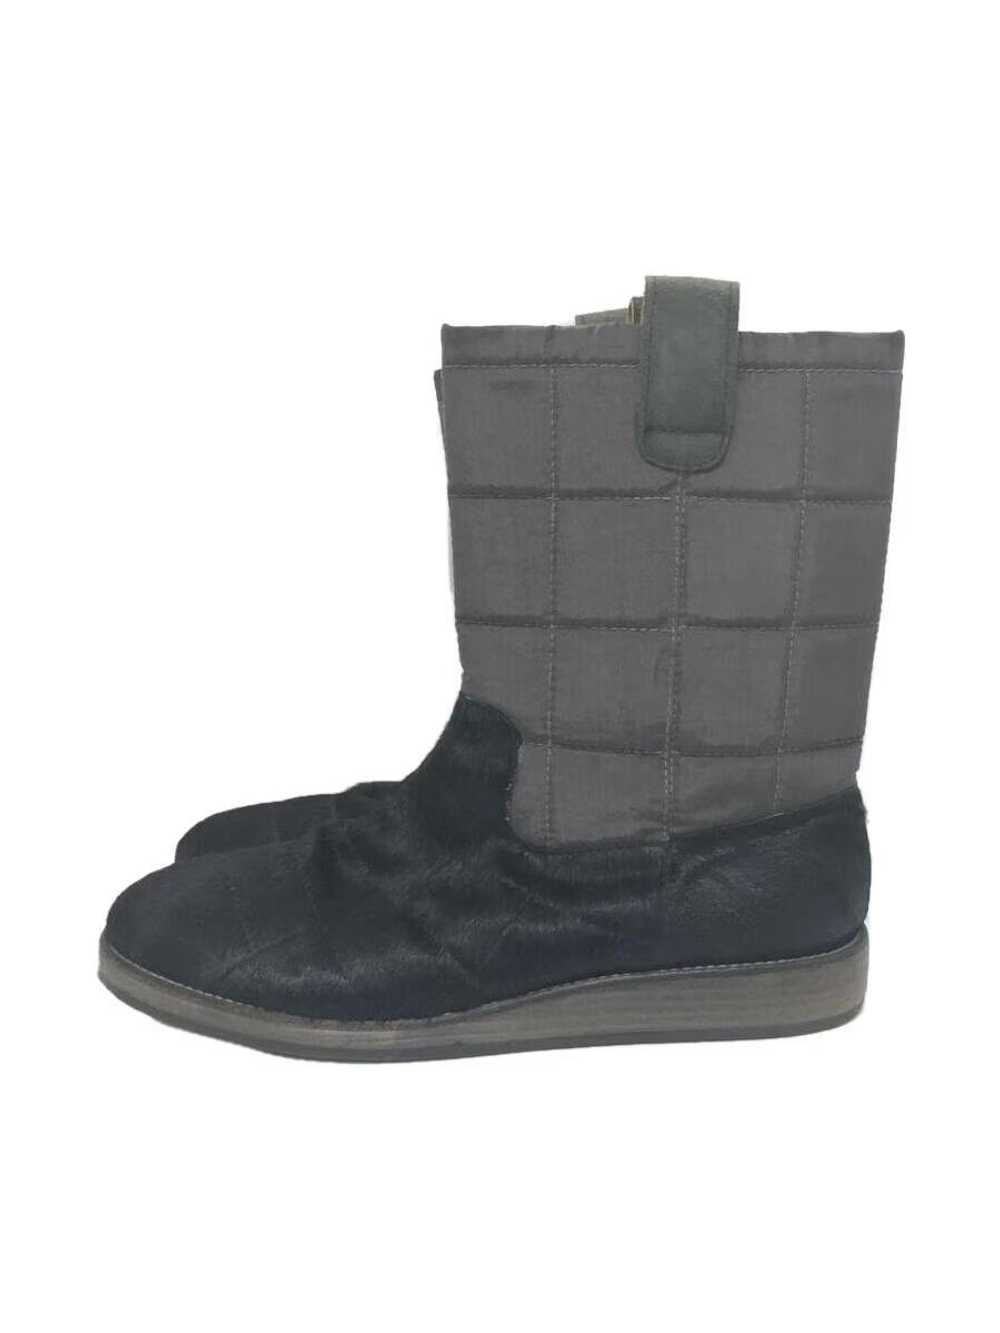 Maison Margiela Black Quilted Fur Boots - image 2